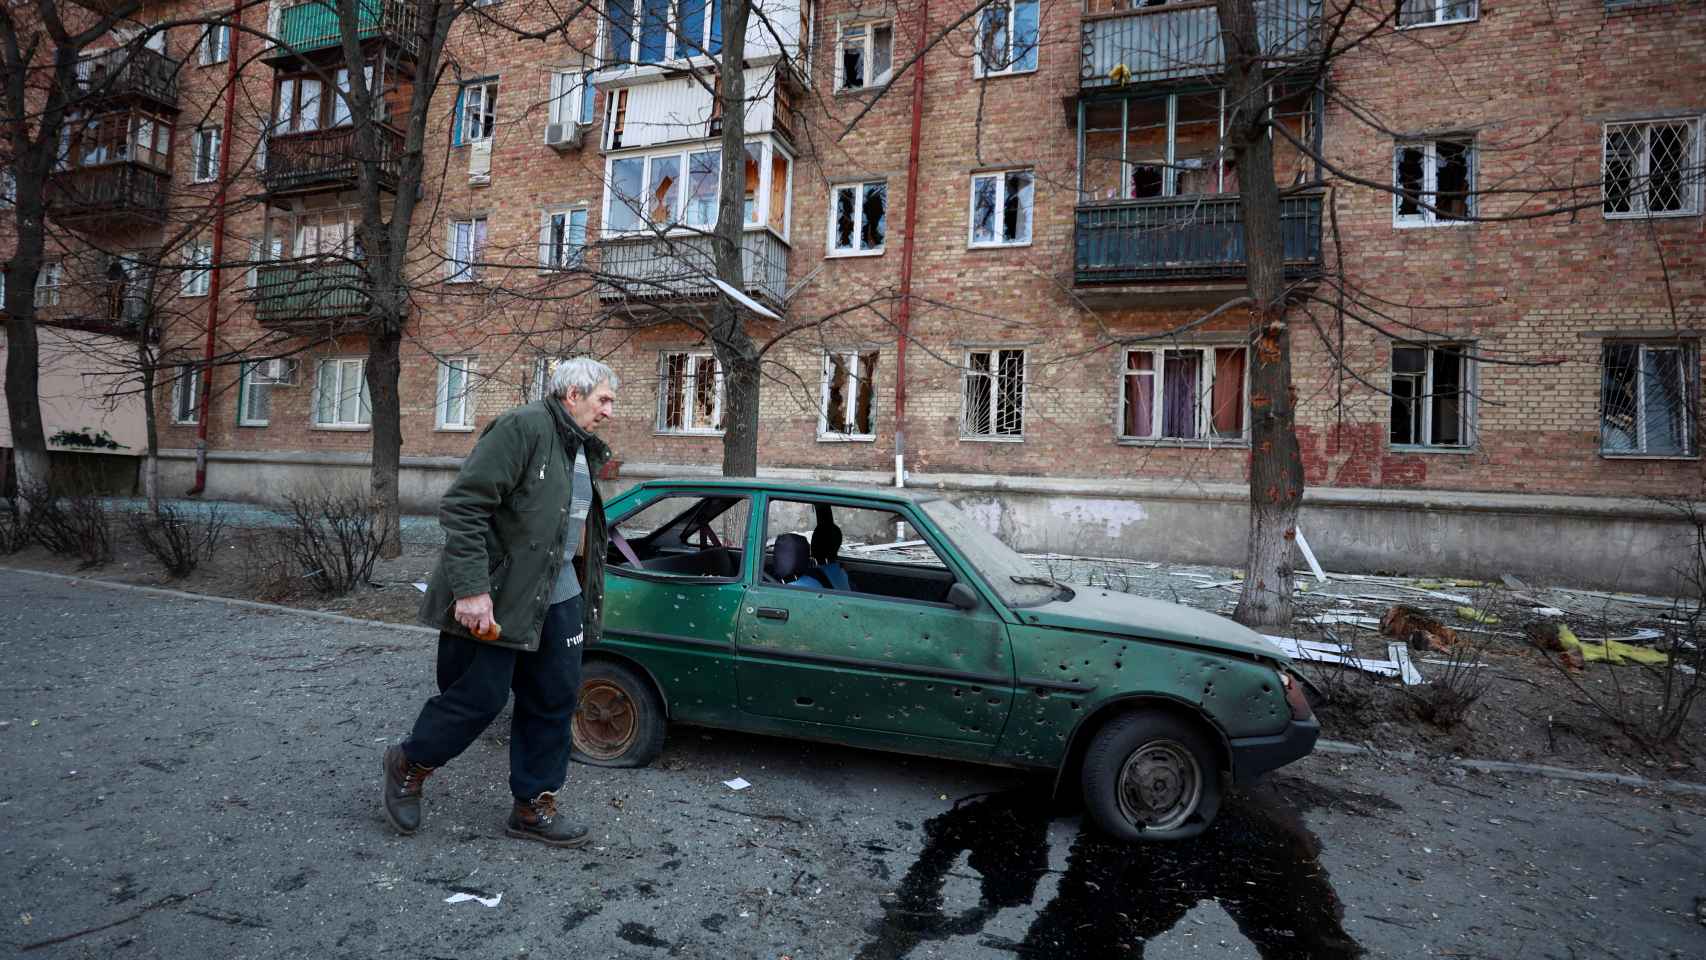 Imagen de Kiev después de los ataques en la capital.